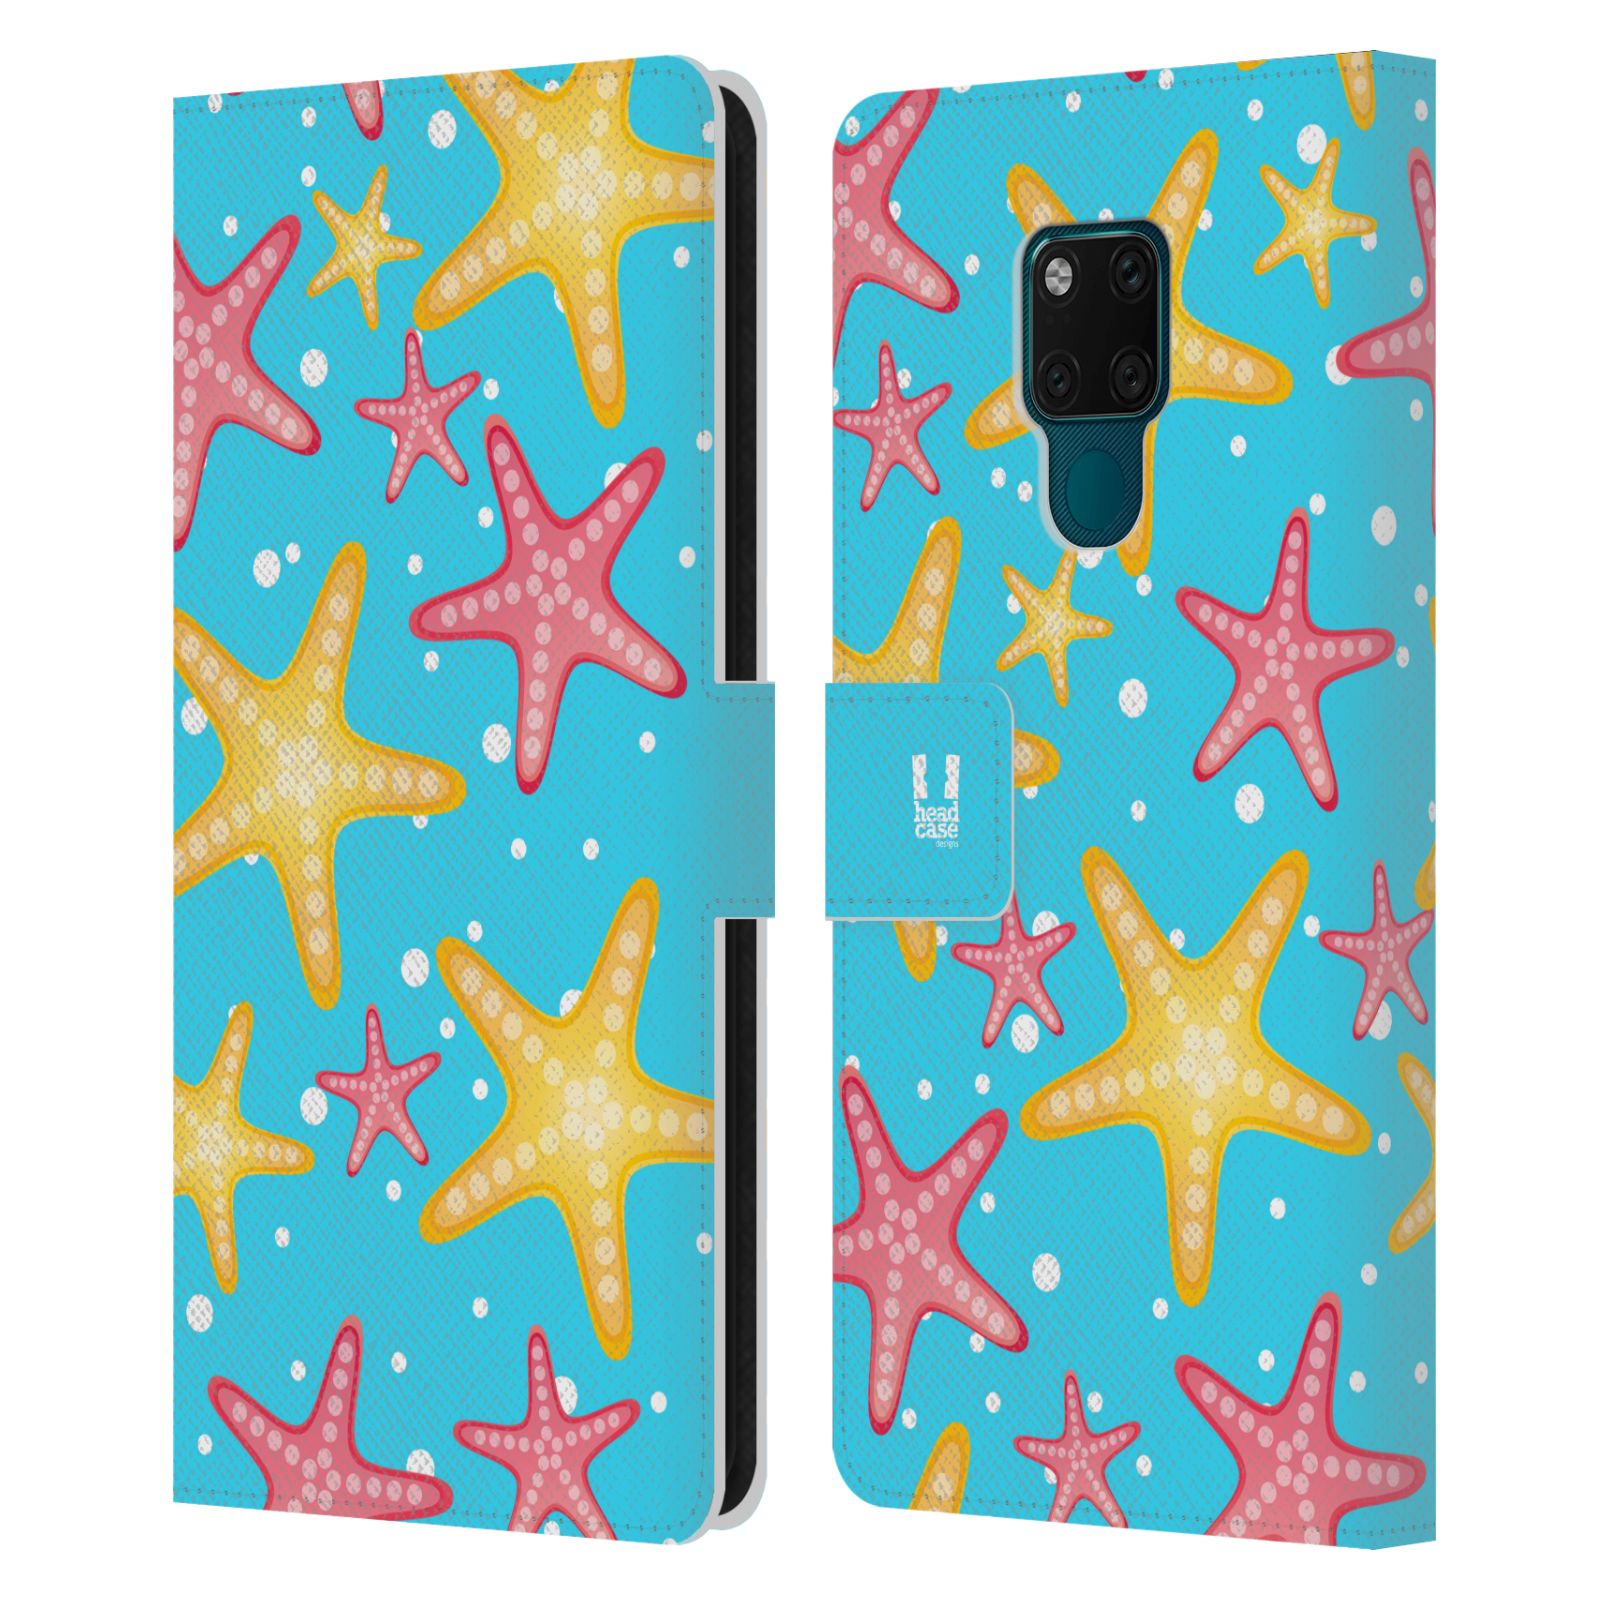 Pouzdro pro mobil Huawei Mate 20X 5G - Mořský vzor - barevné hvězdy